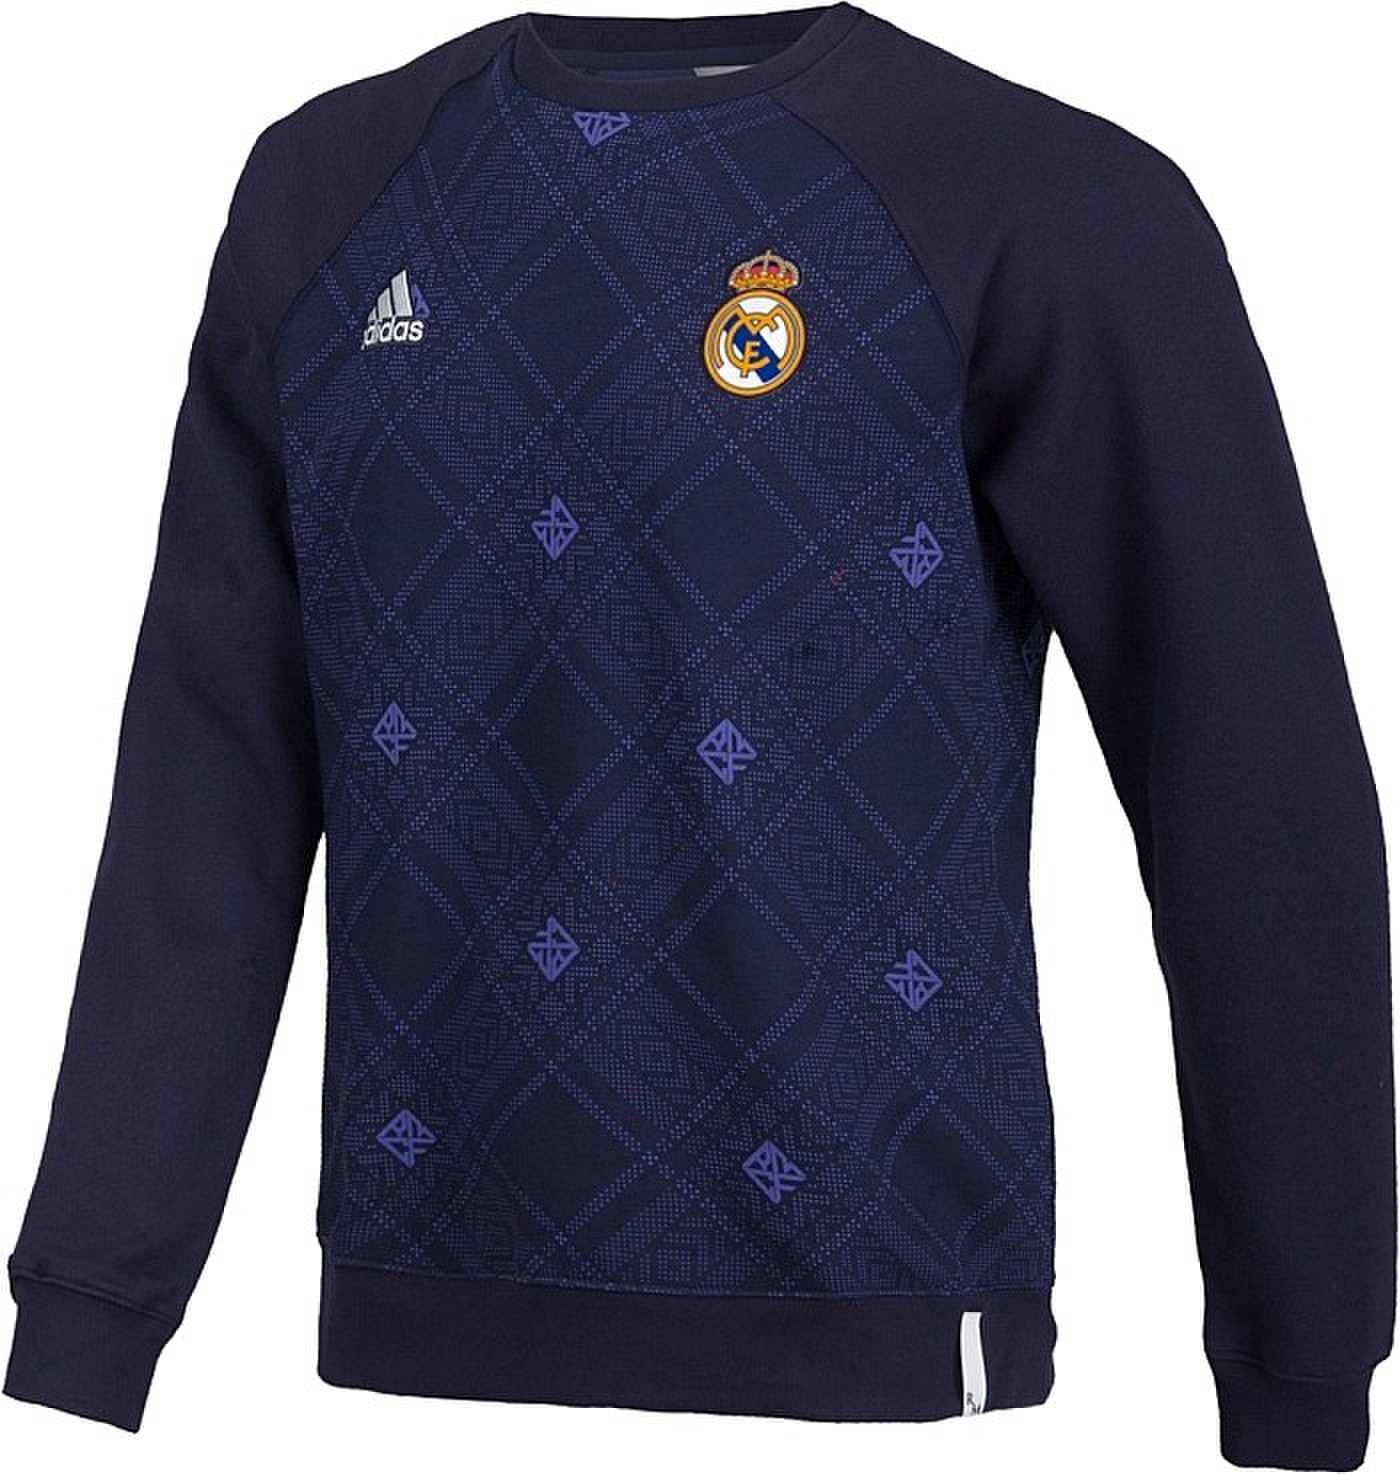 13-14 Real Madrid Navy Pattern Sweatshirt - Click Image to Close